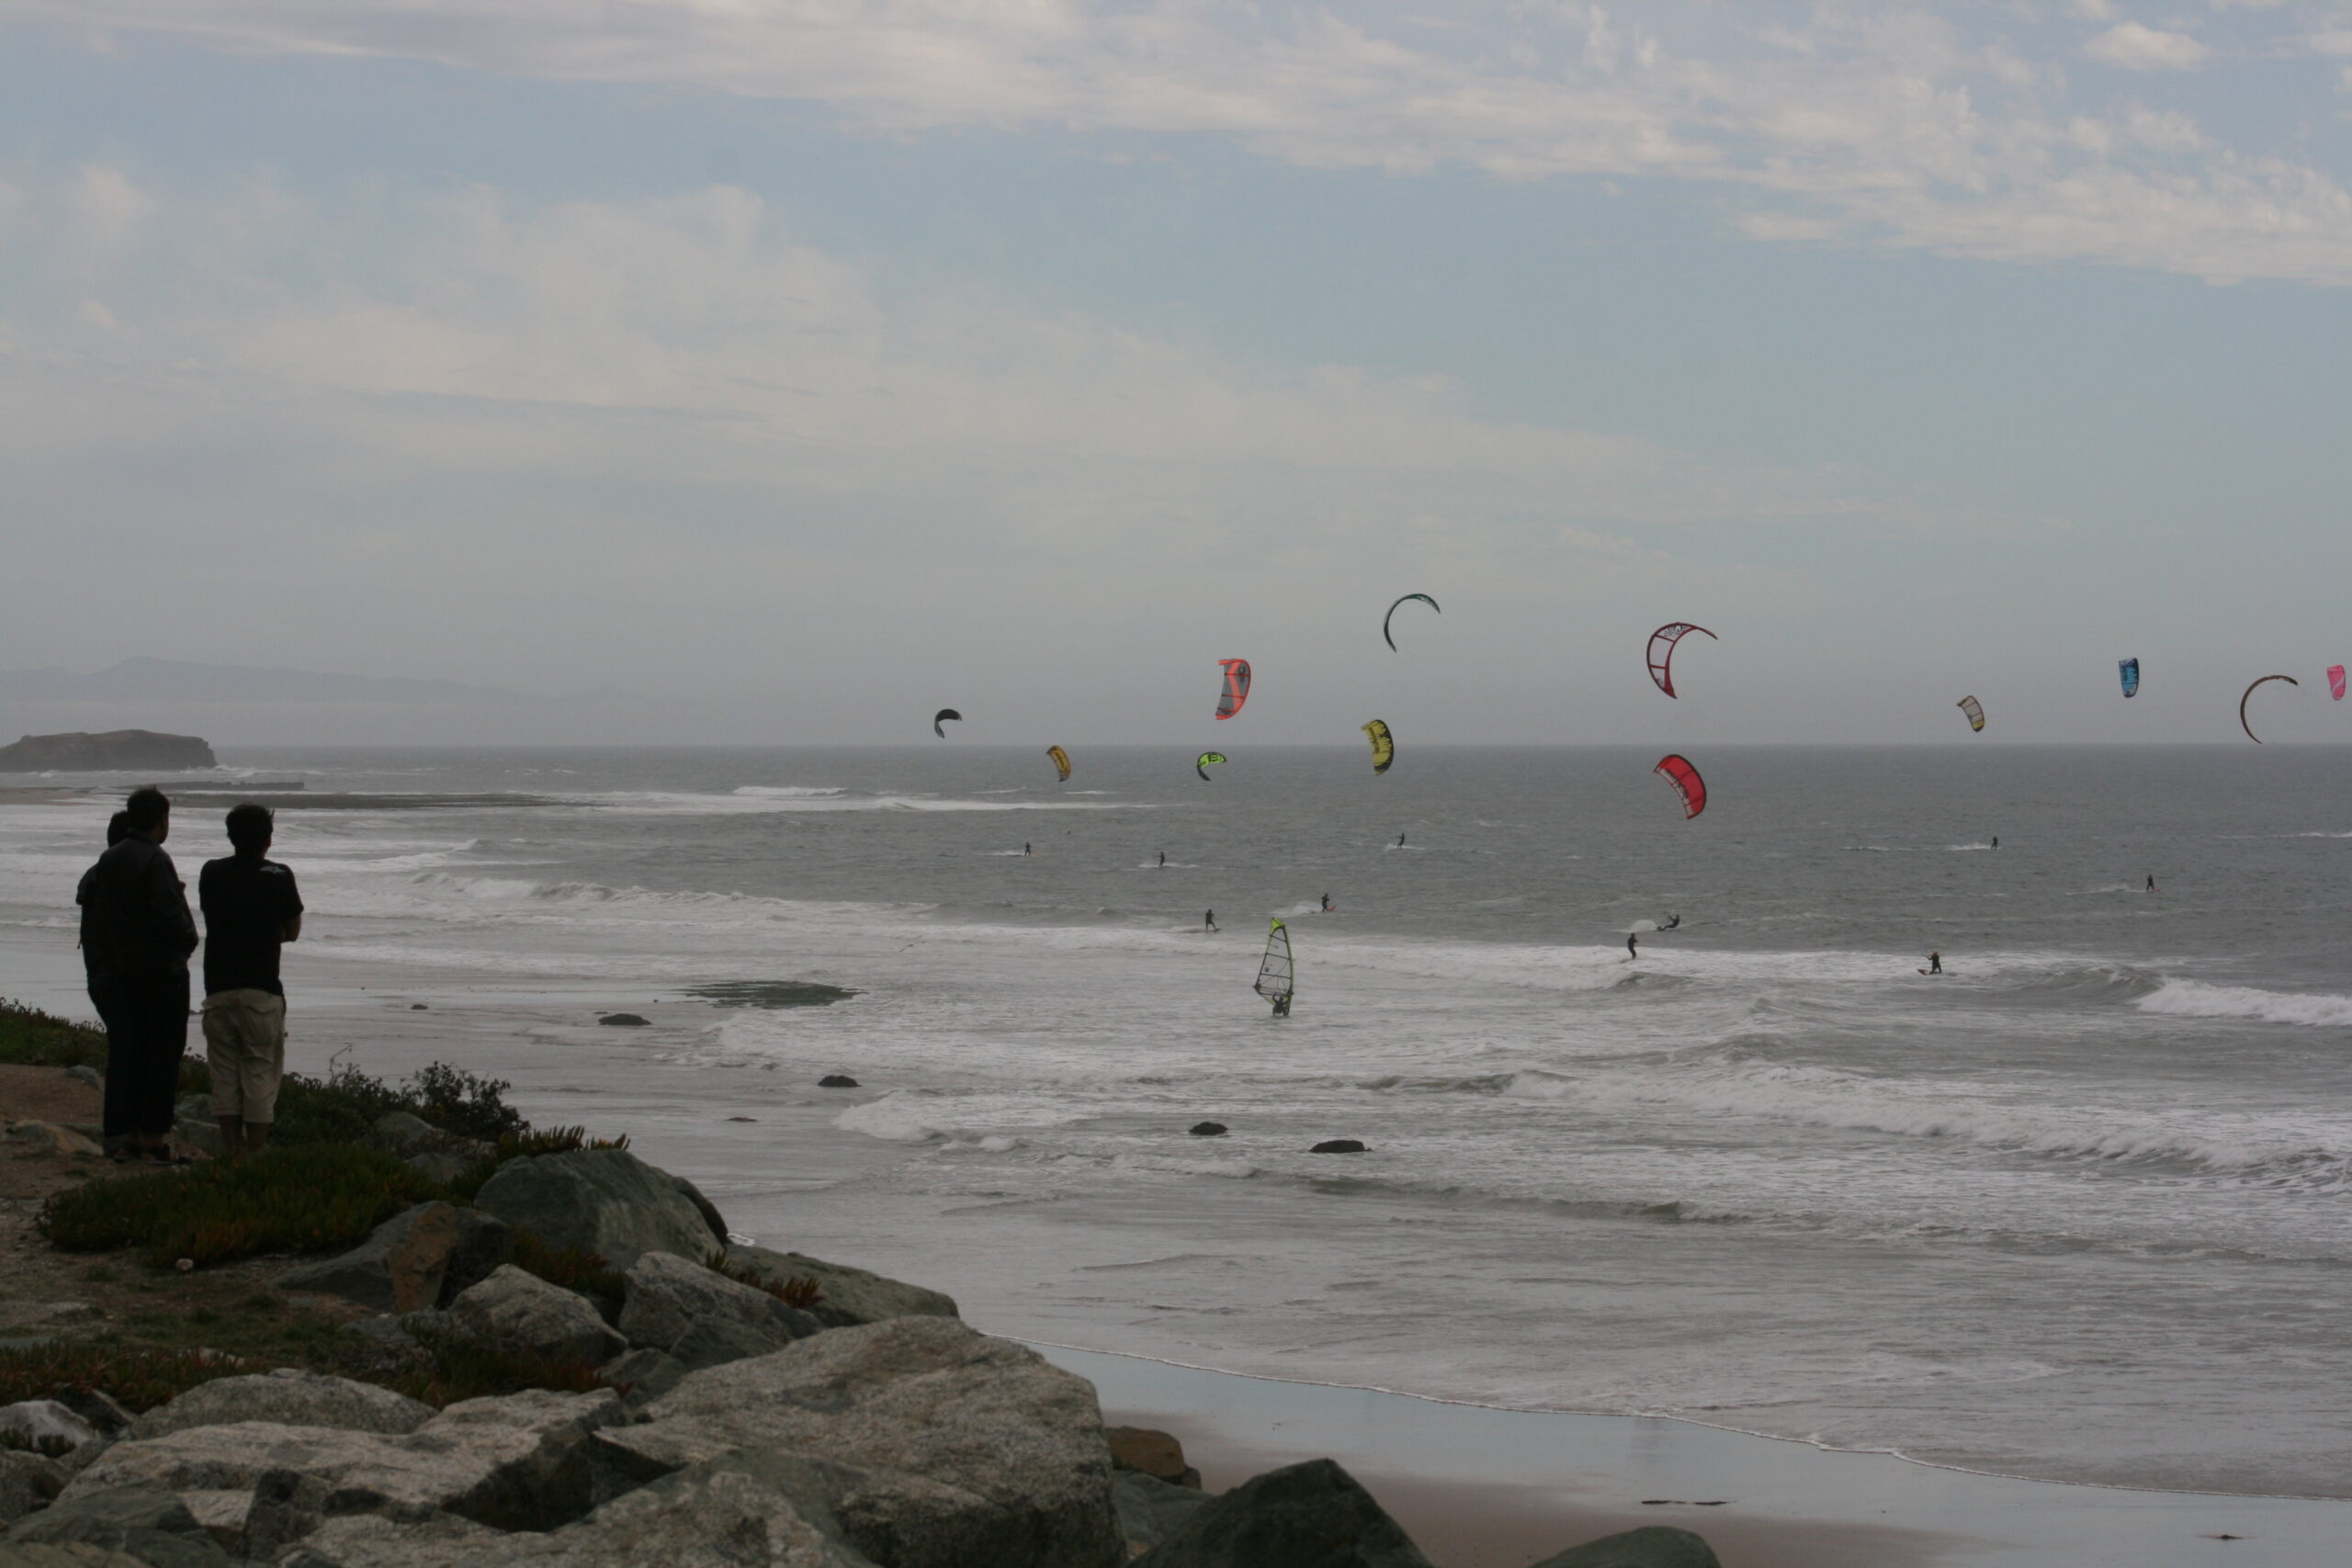 Children watch kite surfers on the Pacific Ocean near Santa Cruz, California.